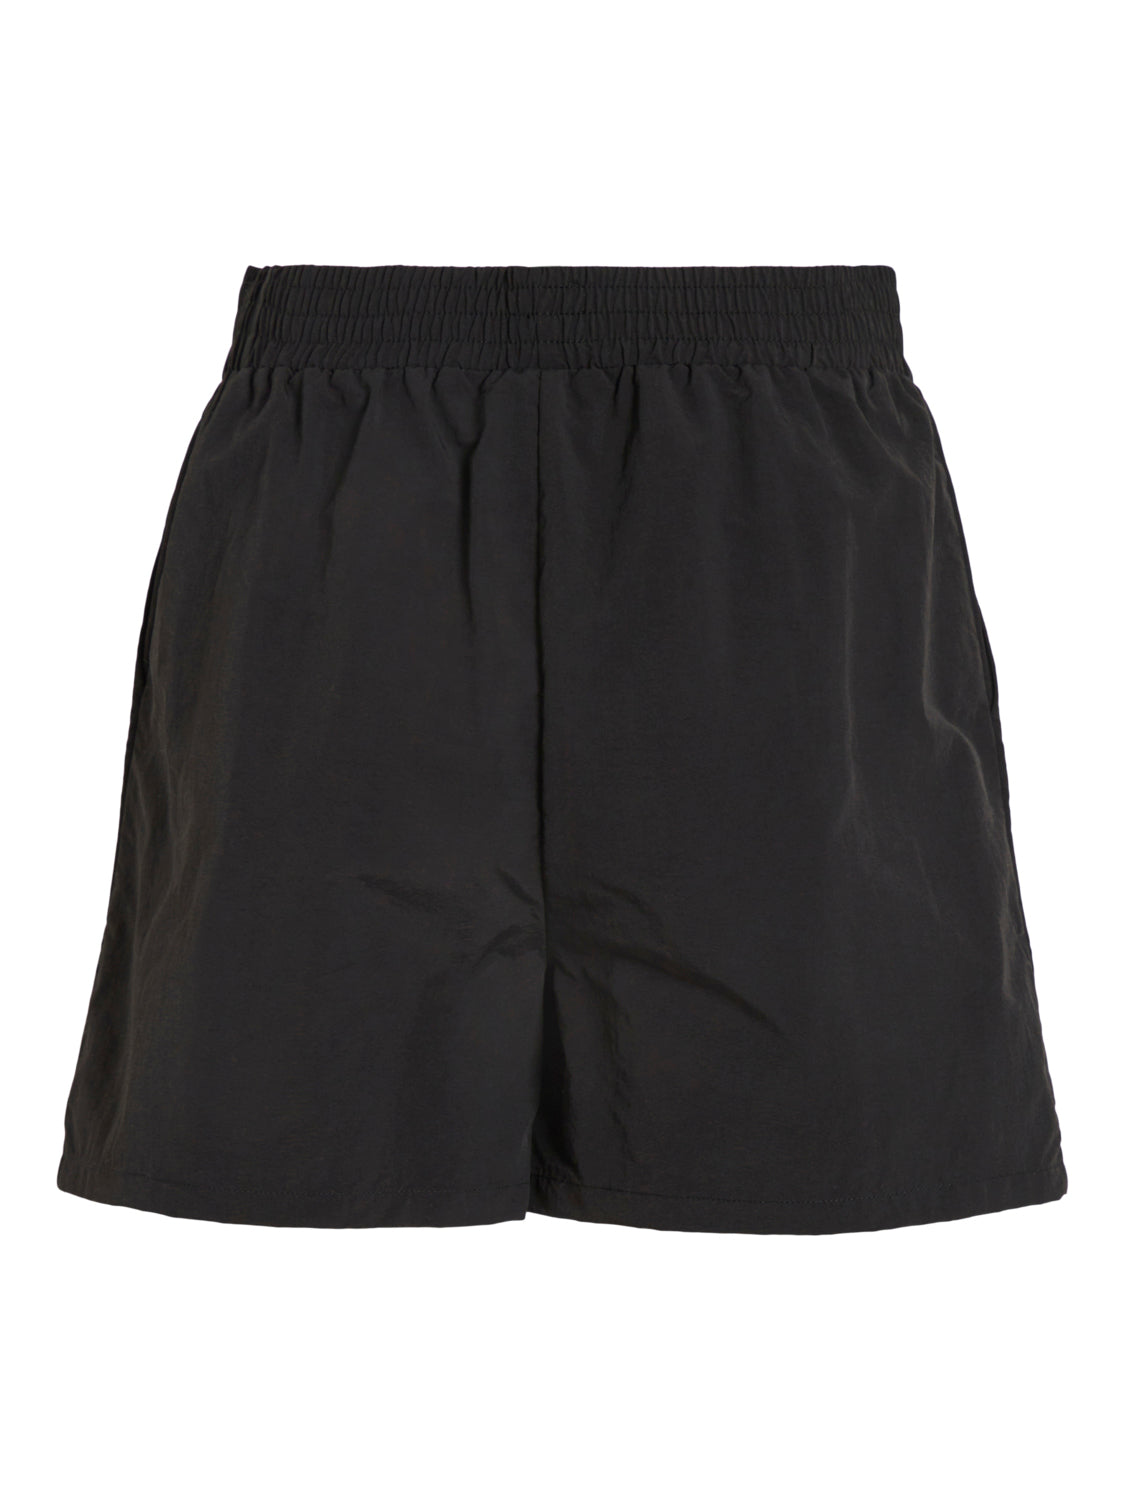 VINYLLIE Shorts - Black